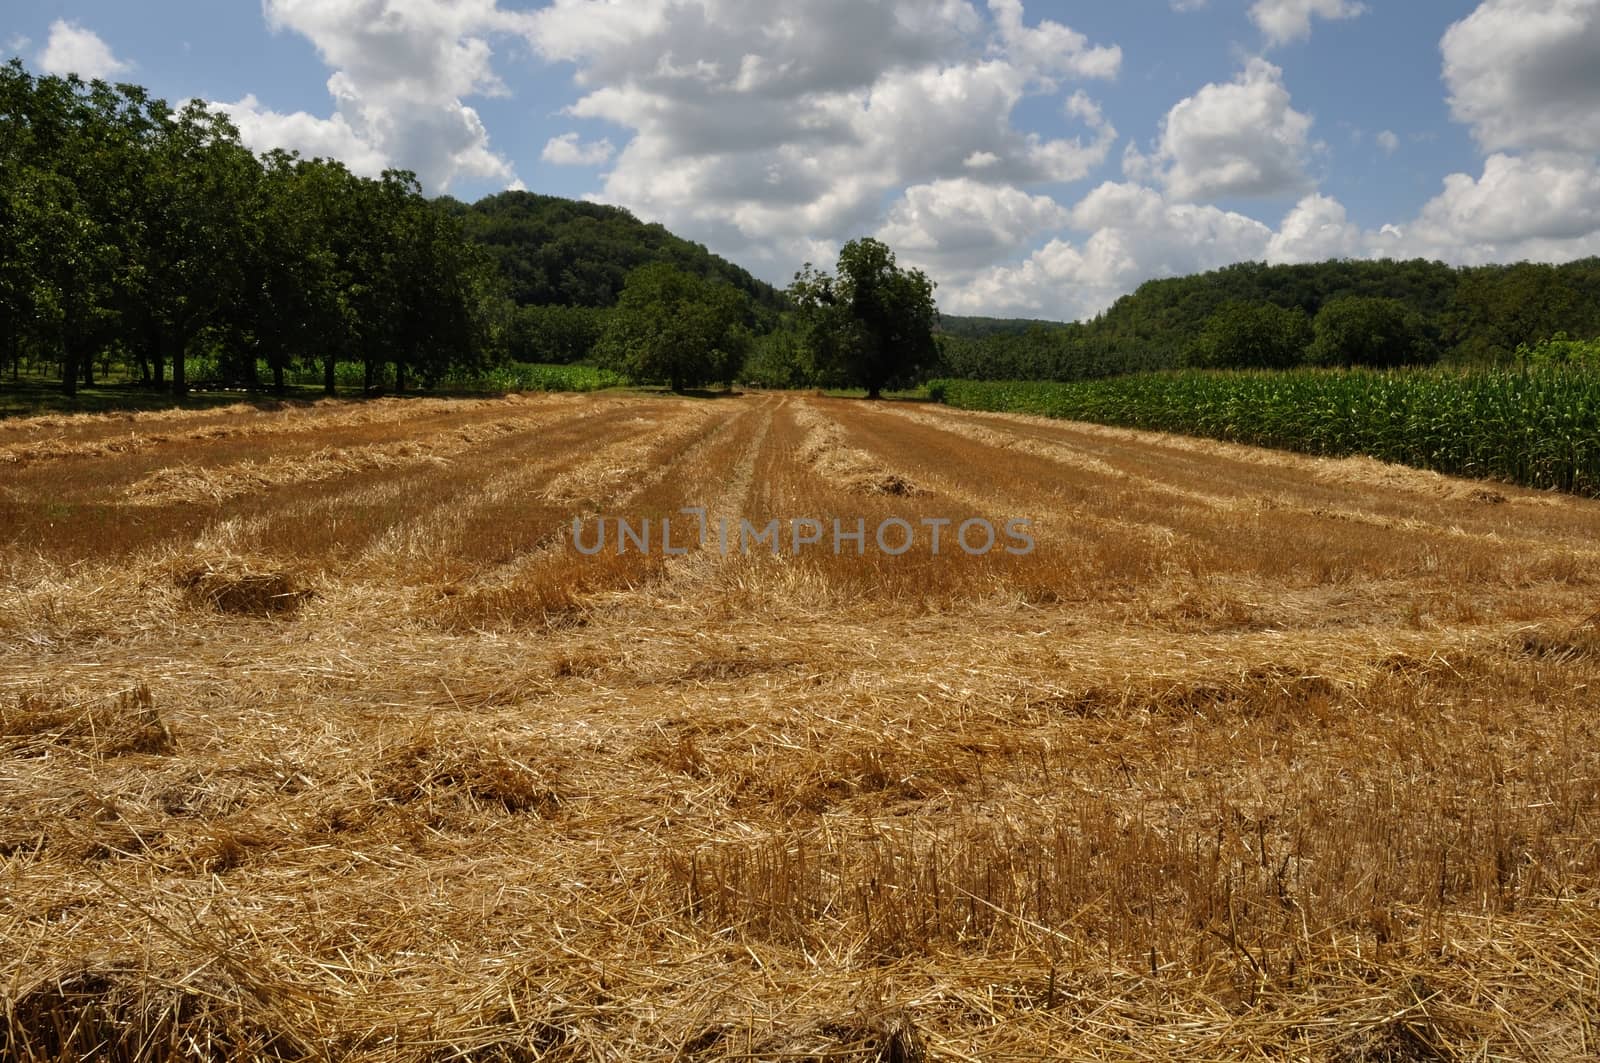 Rural landscape in Dordogne by BZH22